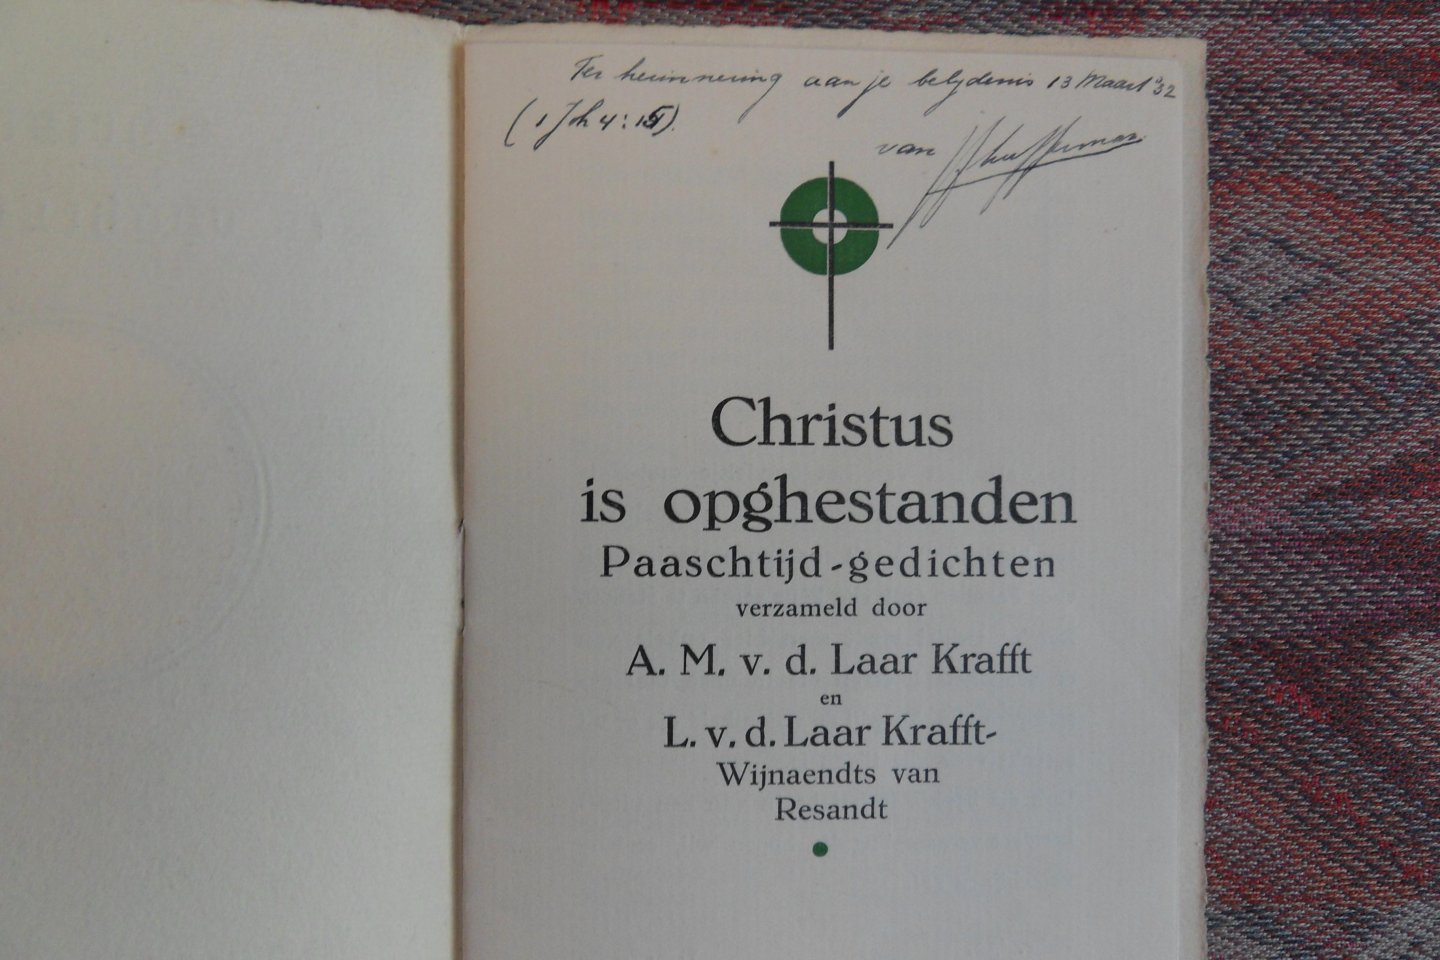 Laar Krafft, A.M. v.d.; Laar Krafft - Wijnaendts van Resandt, L. v.d. - Christus is opghestanden. - Paaschtijd-gedichten.